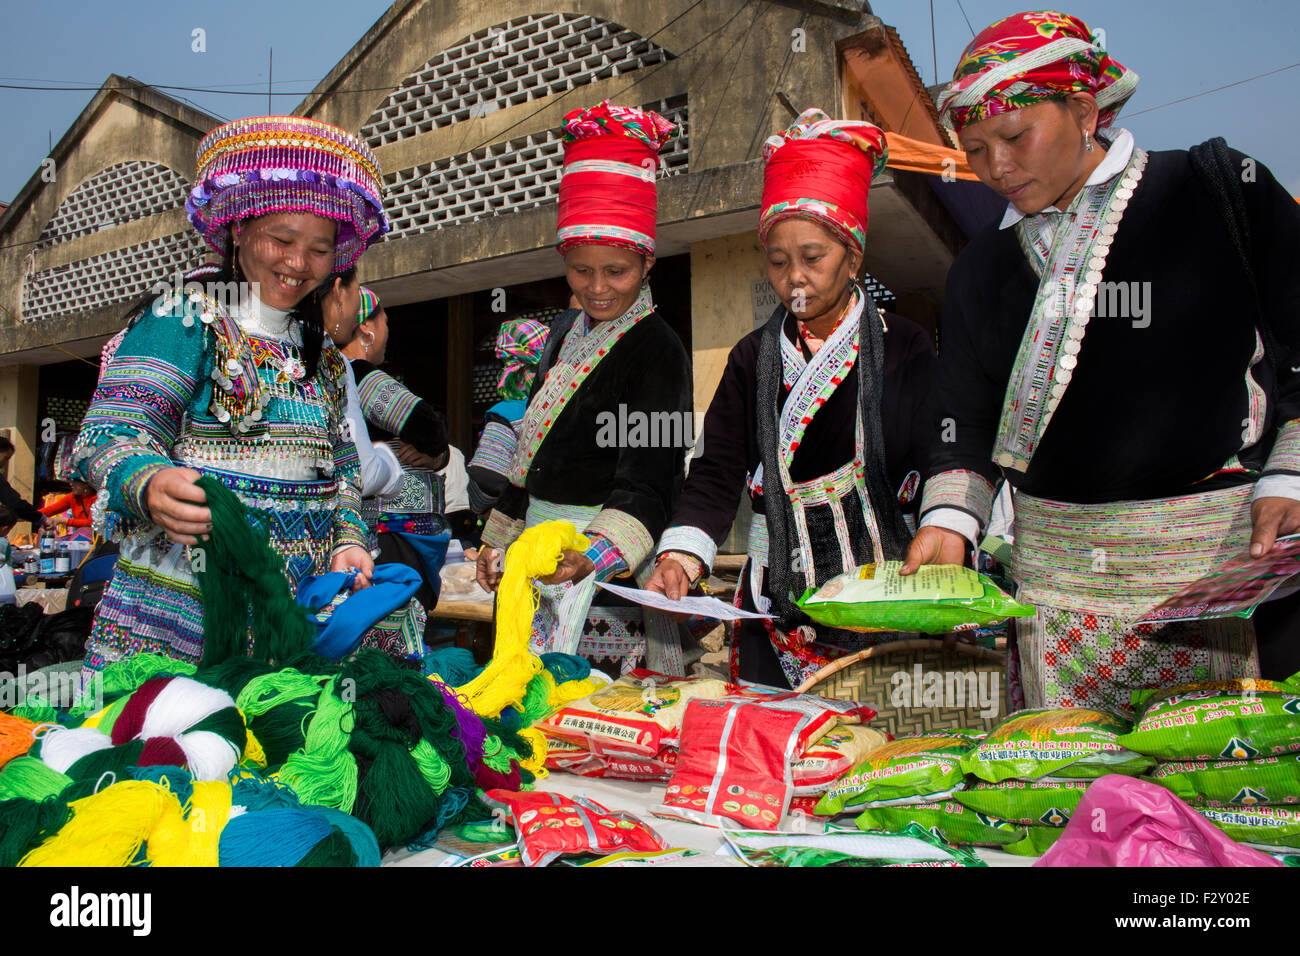 Tribu de la etnia hmong, ir de compras al mercado Muong Hum, Vietnam. Foto de stock